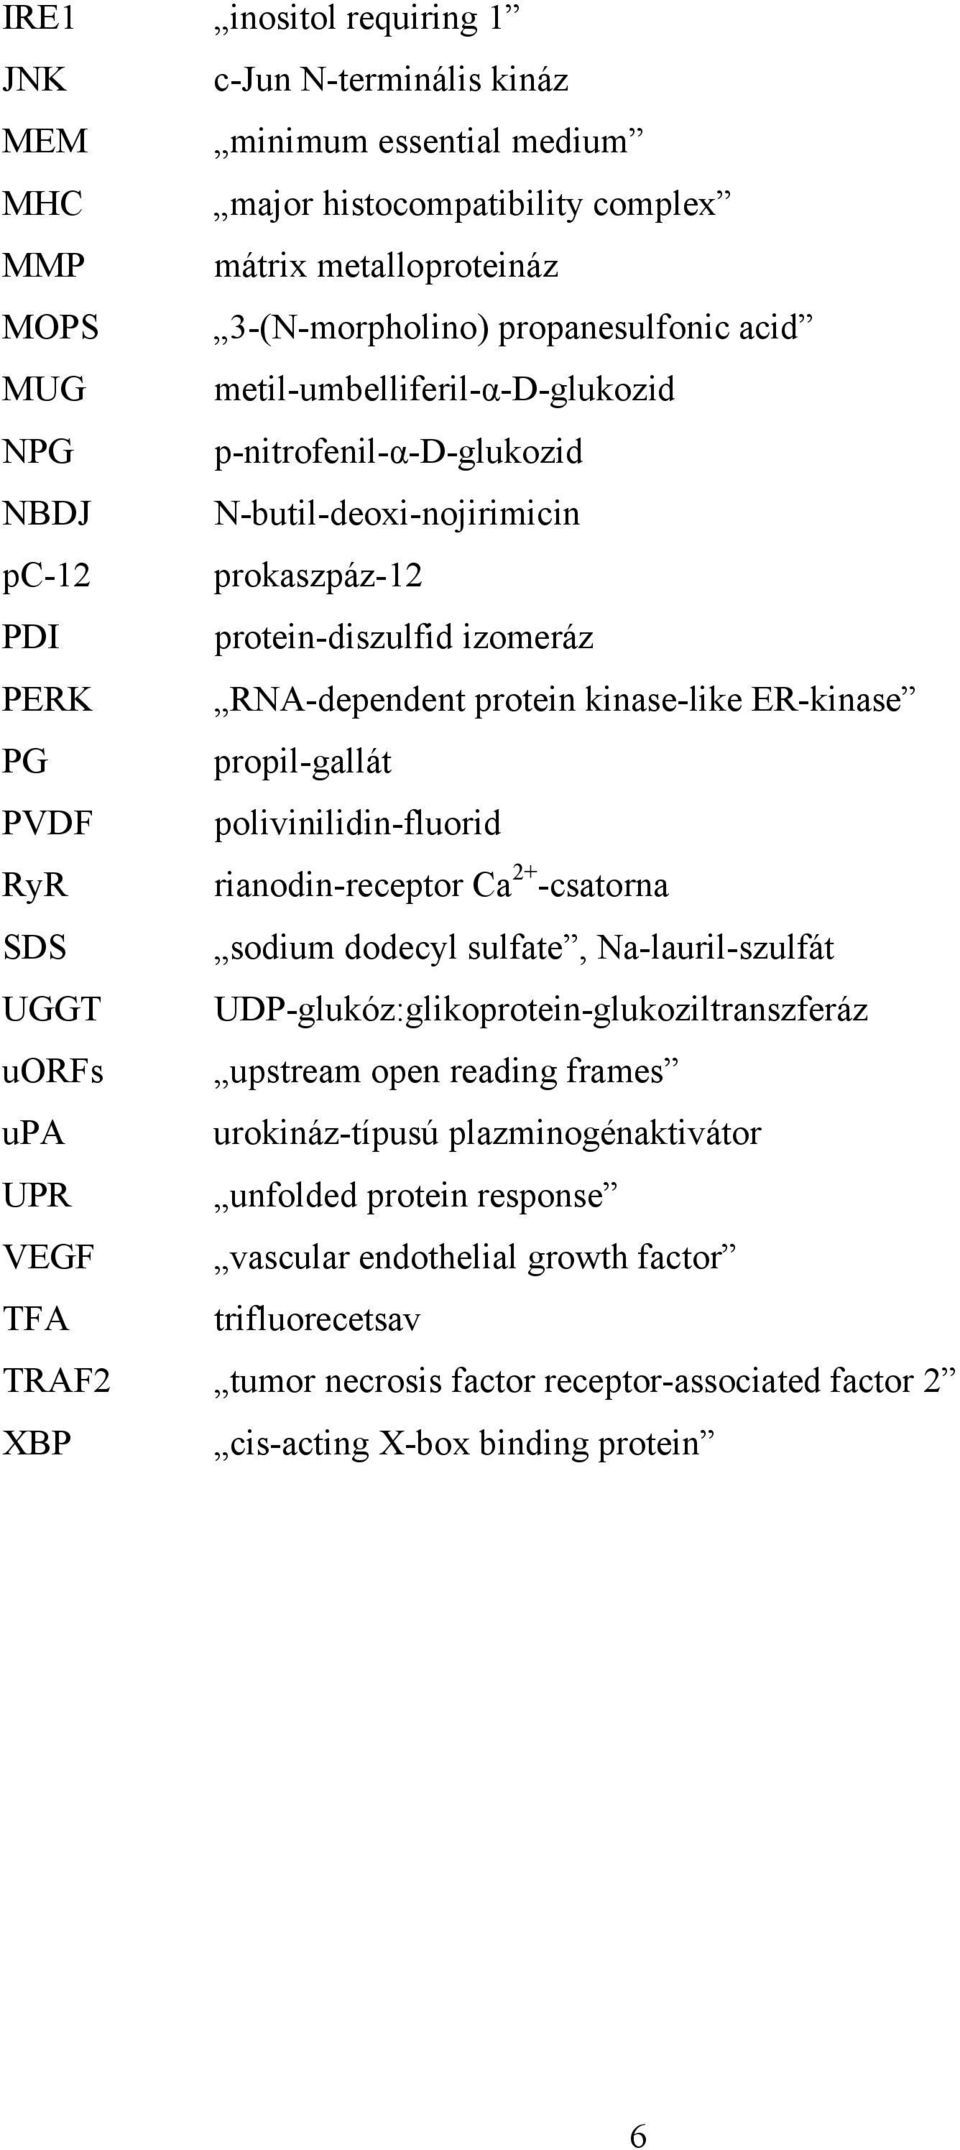 propil-gallát PVDF polivinilidin-fluorid RyR rianodin-receptor Ca 2+ -csatorna SDS sodium dodecyl sulfate, Na-lauril-szulfát UGGT UDP-glukóz:glikoprotein-glukoziltranszferáz uorfs upstream open